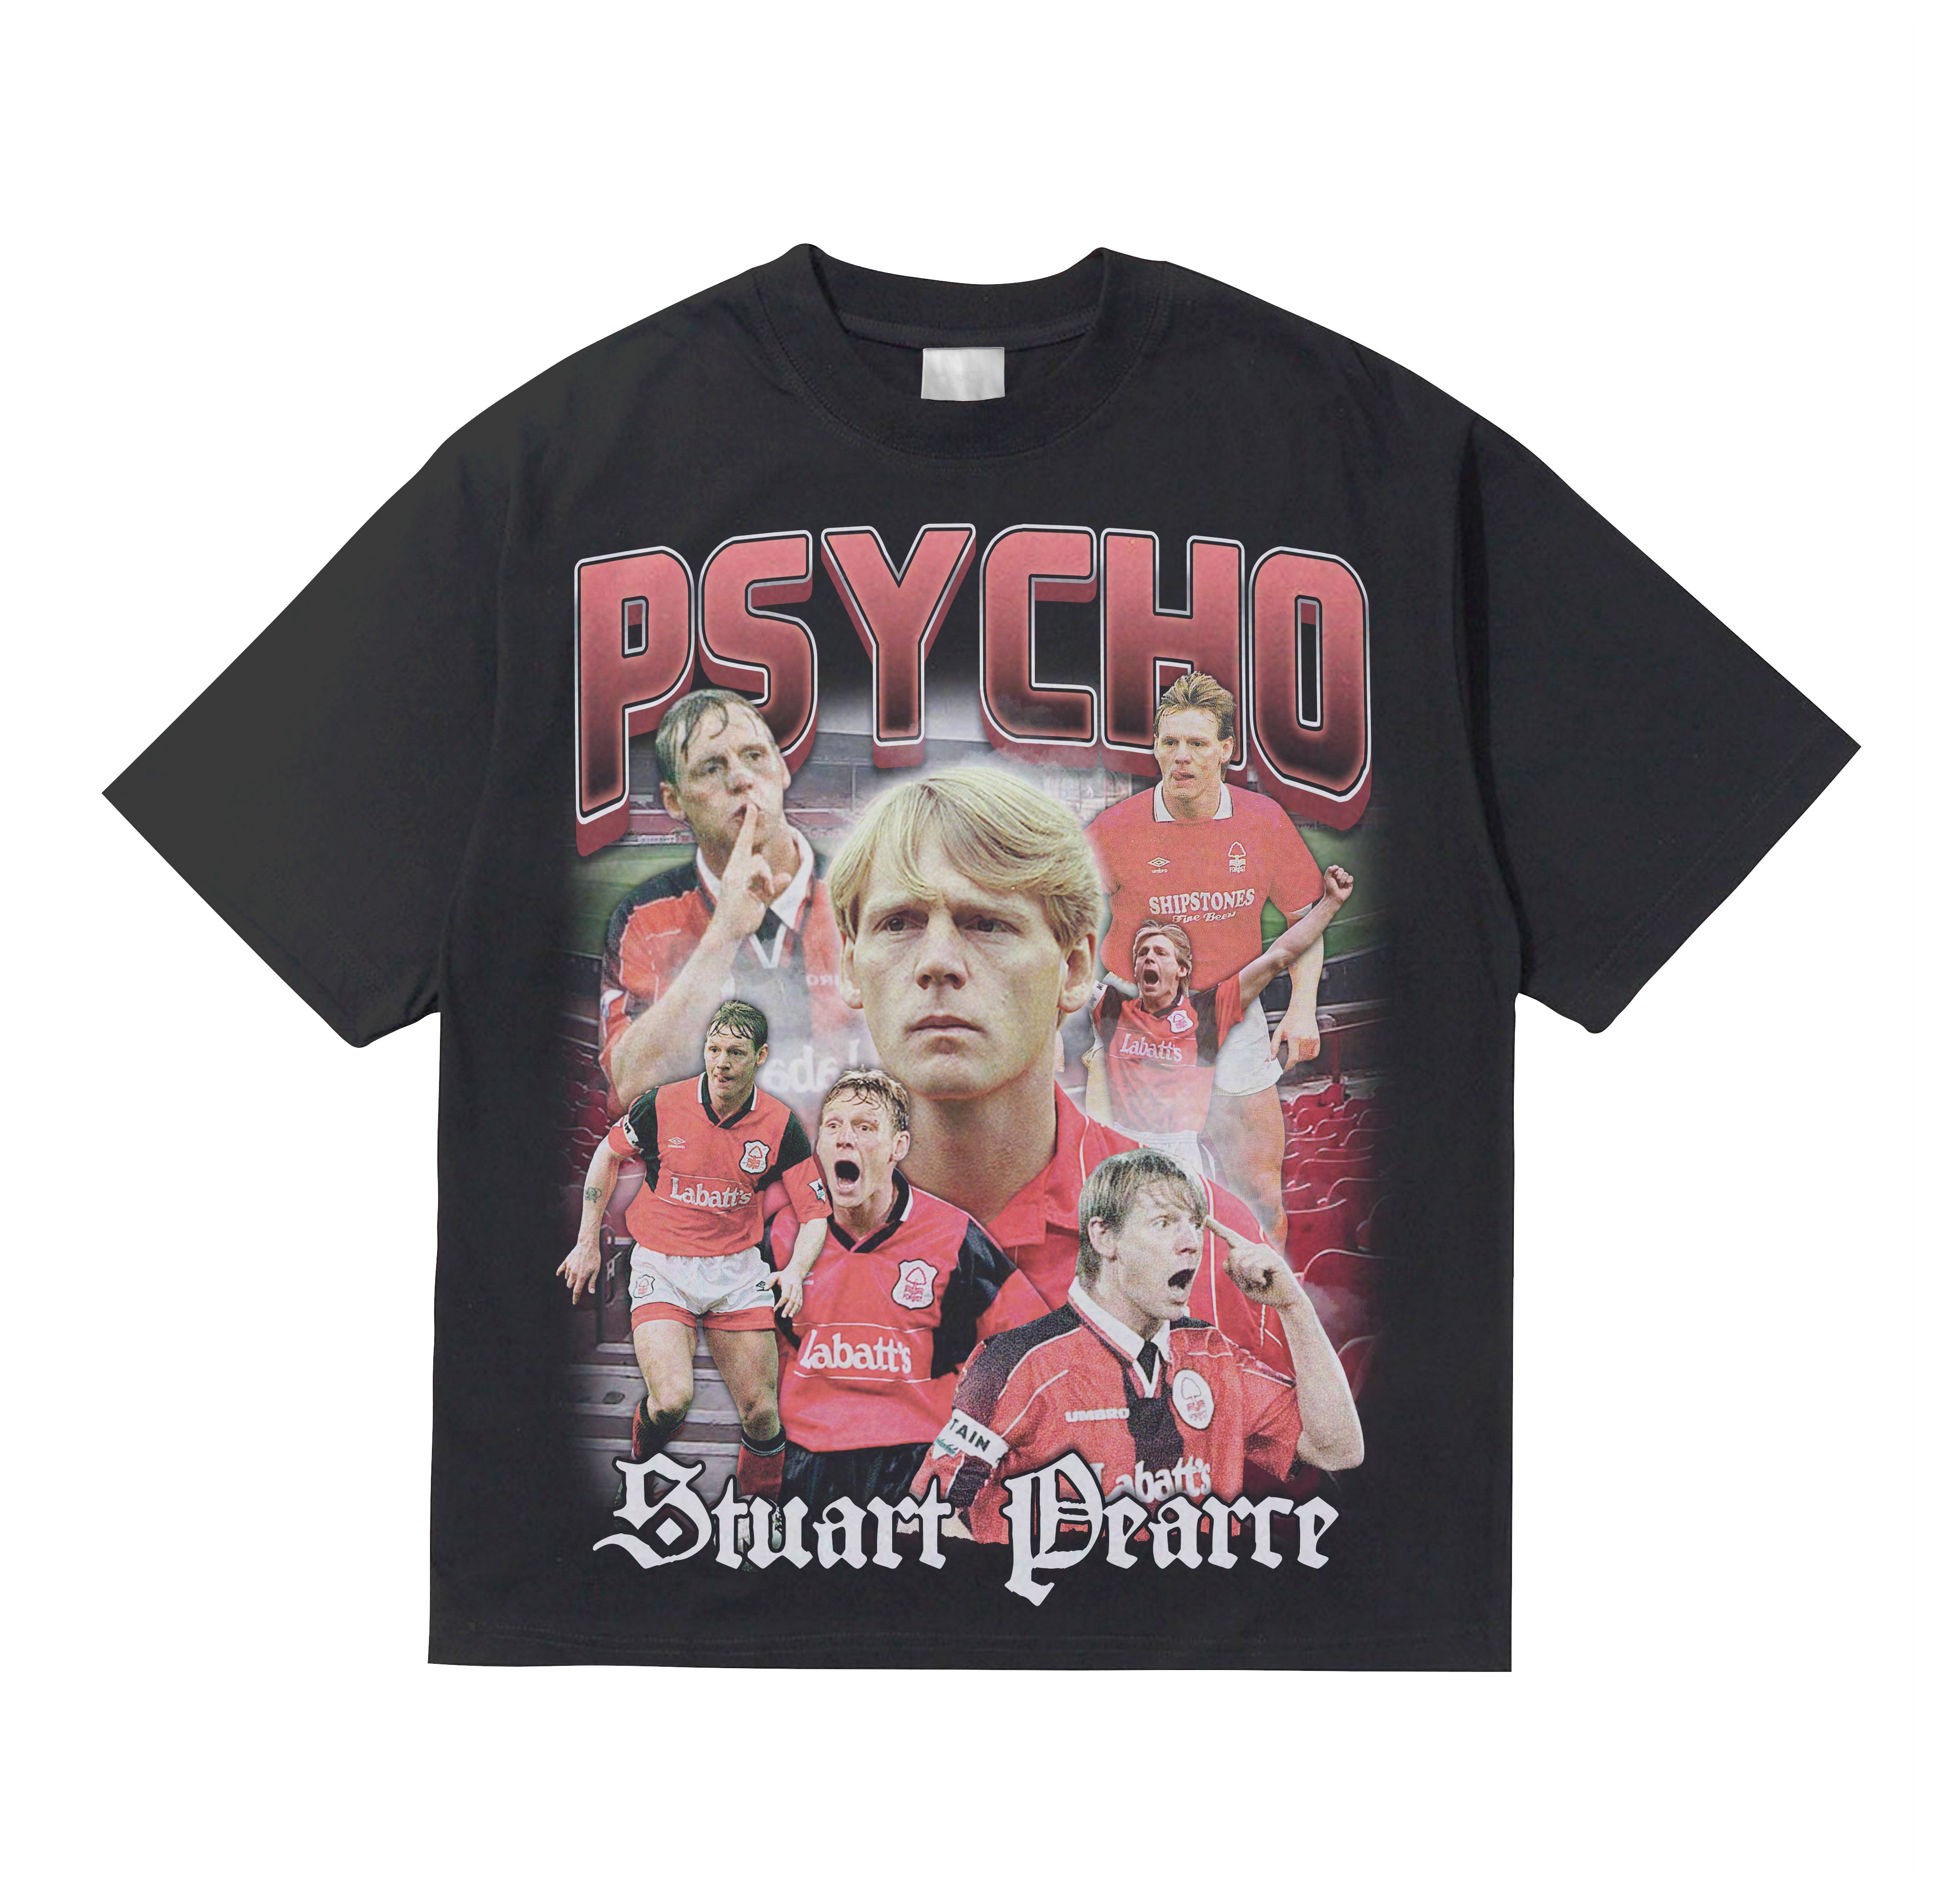 Stuart Pearce Bootleg T-Shirt